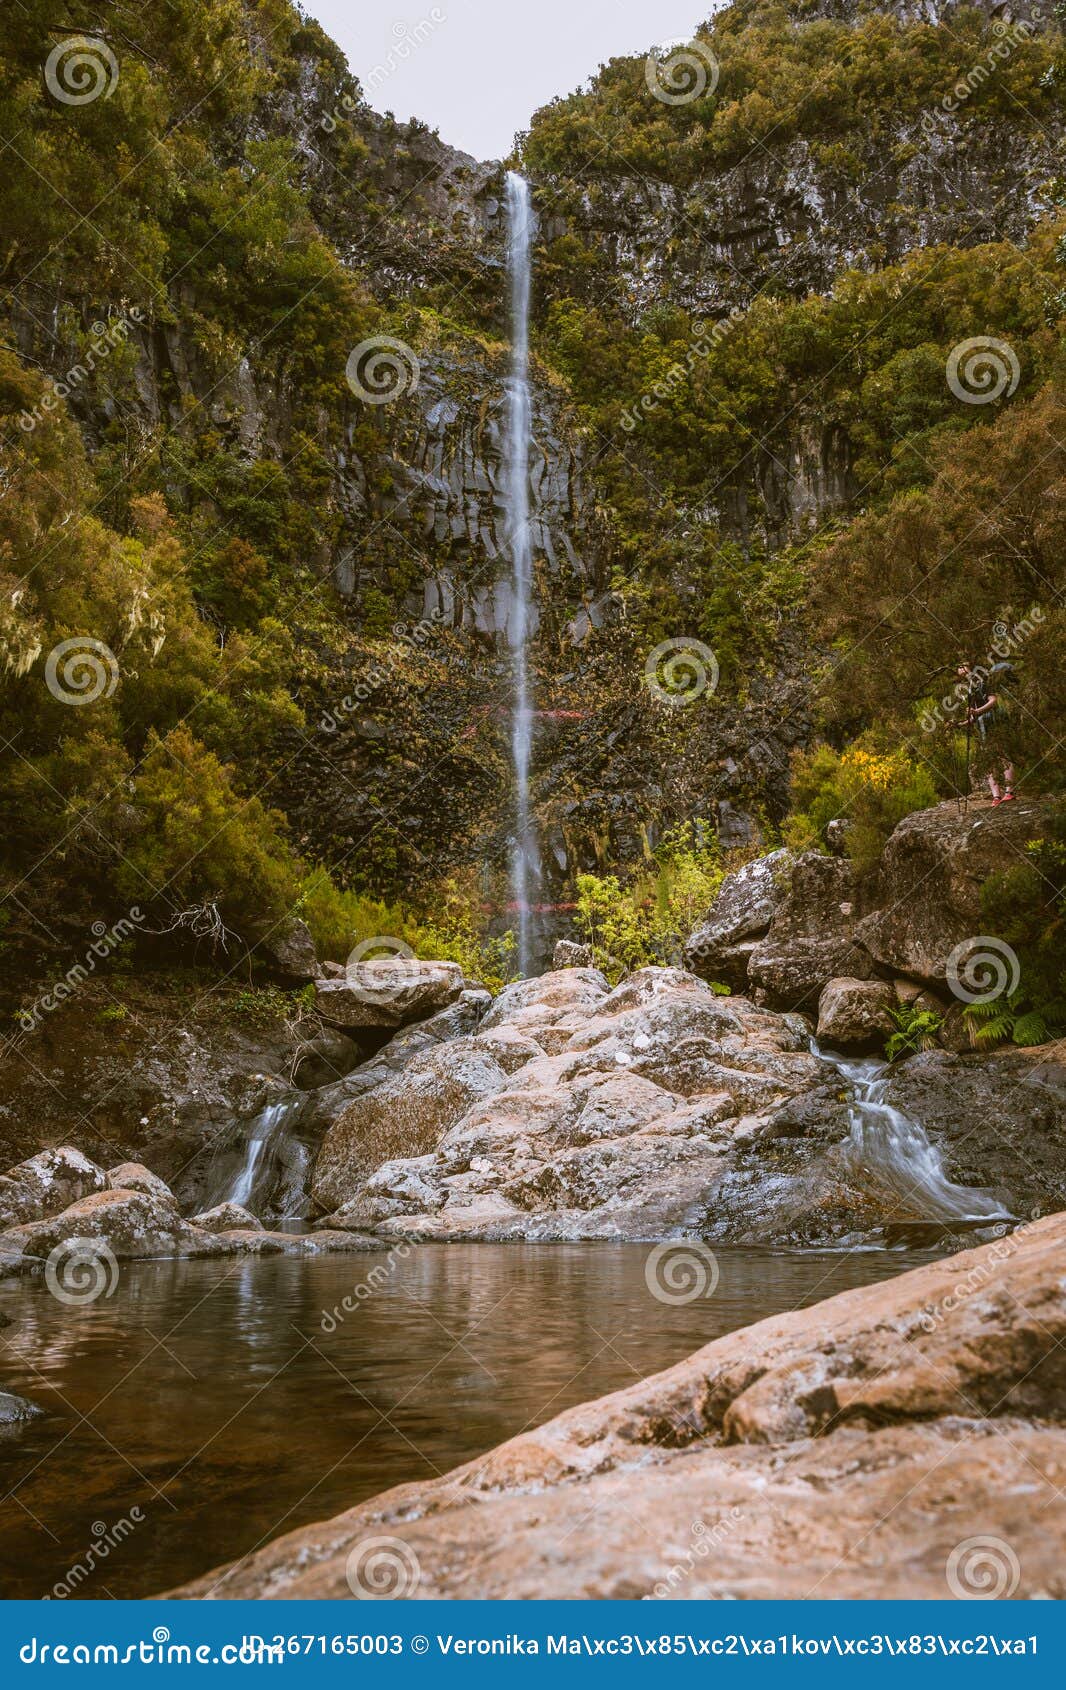 lagoa do vento, risco waterfall in paul da serra, madeira island, portugal, rabacal, 25 waterfalls